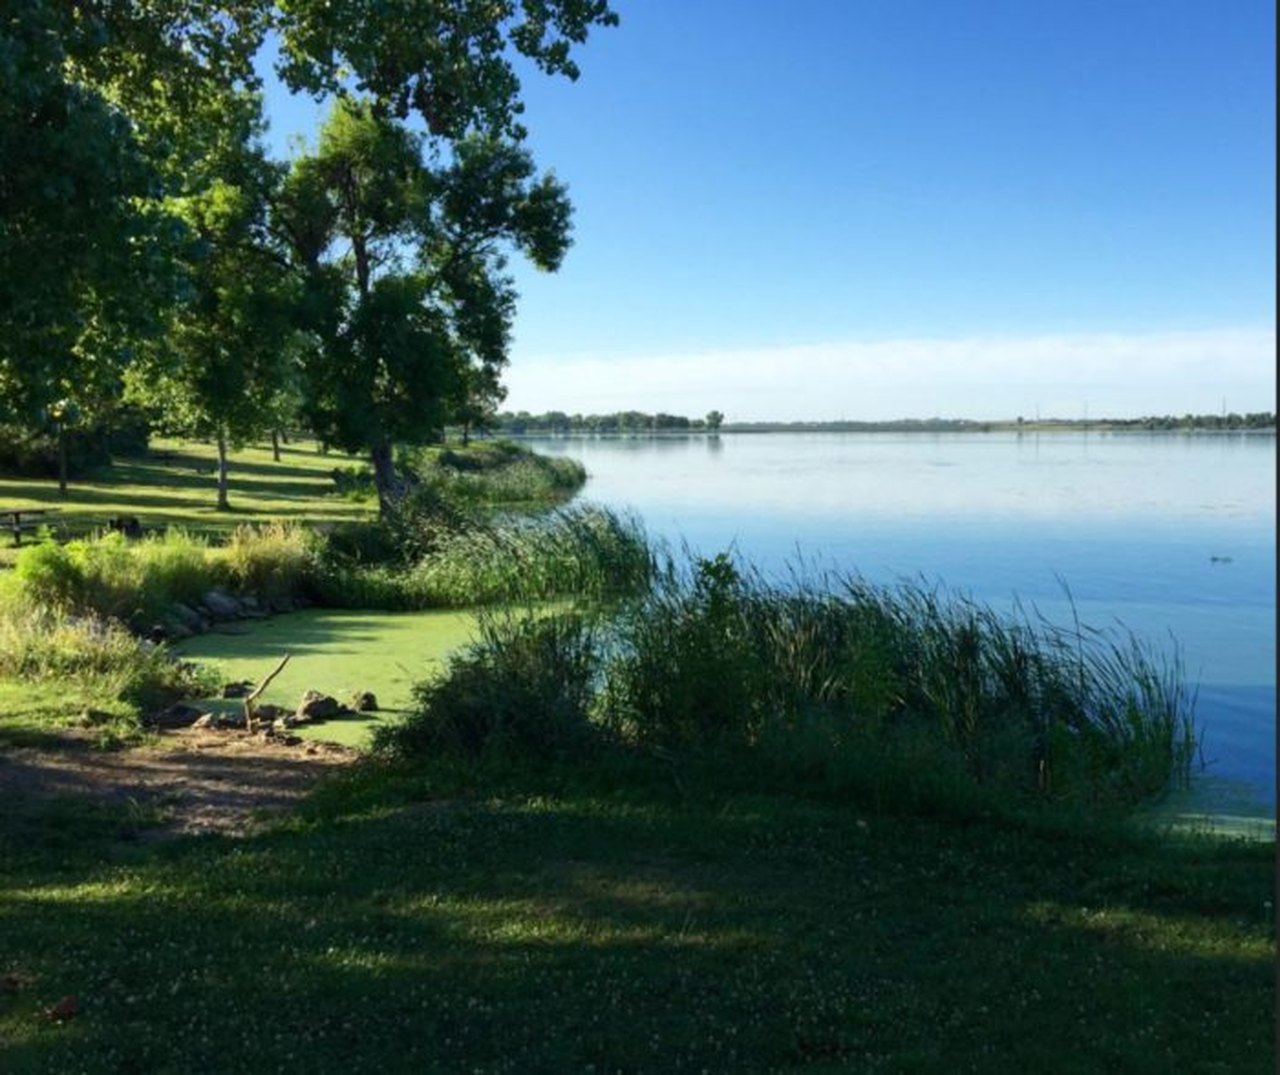 Toxic BlueGreen Algae Has Been Found In Three Nebraska Lakes